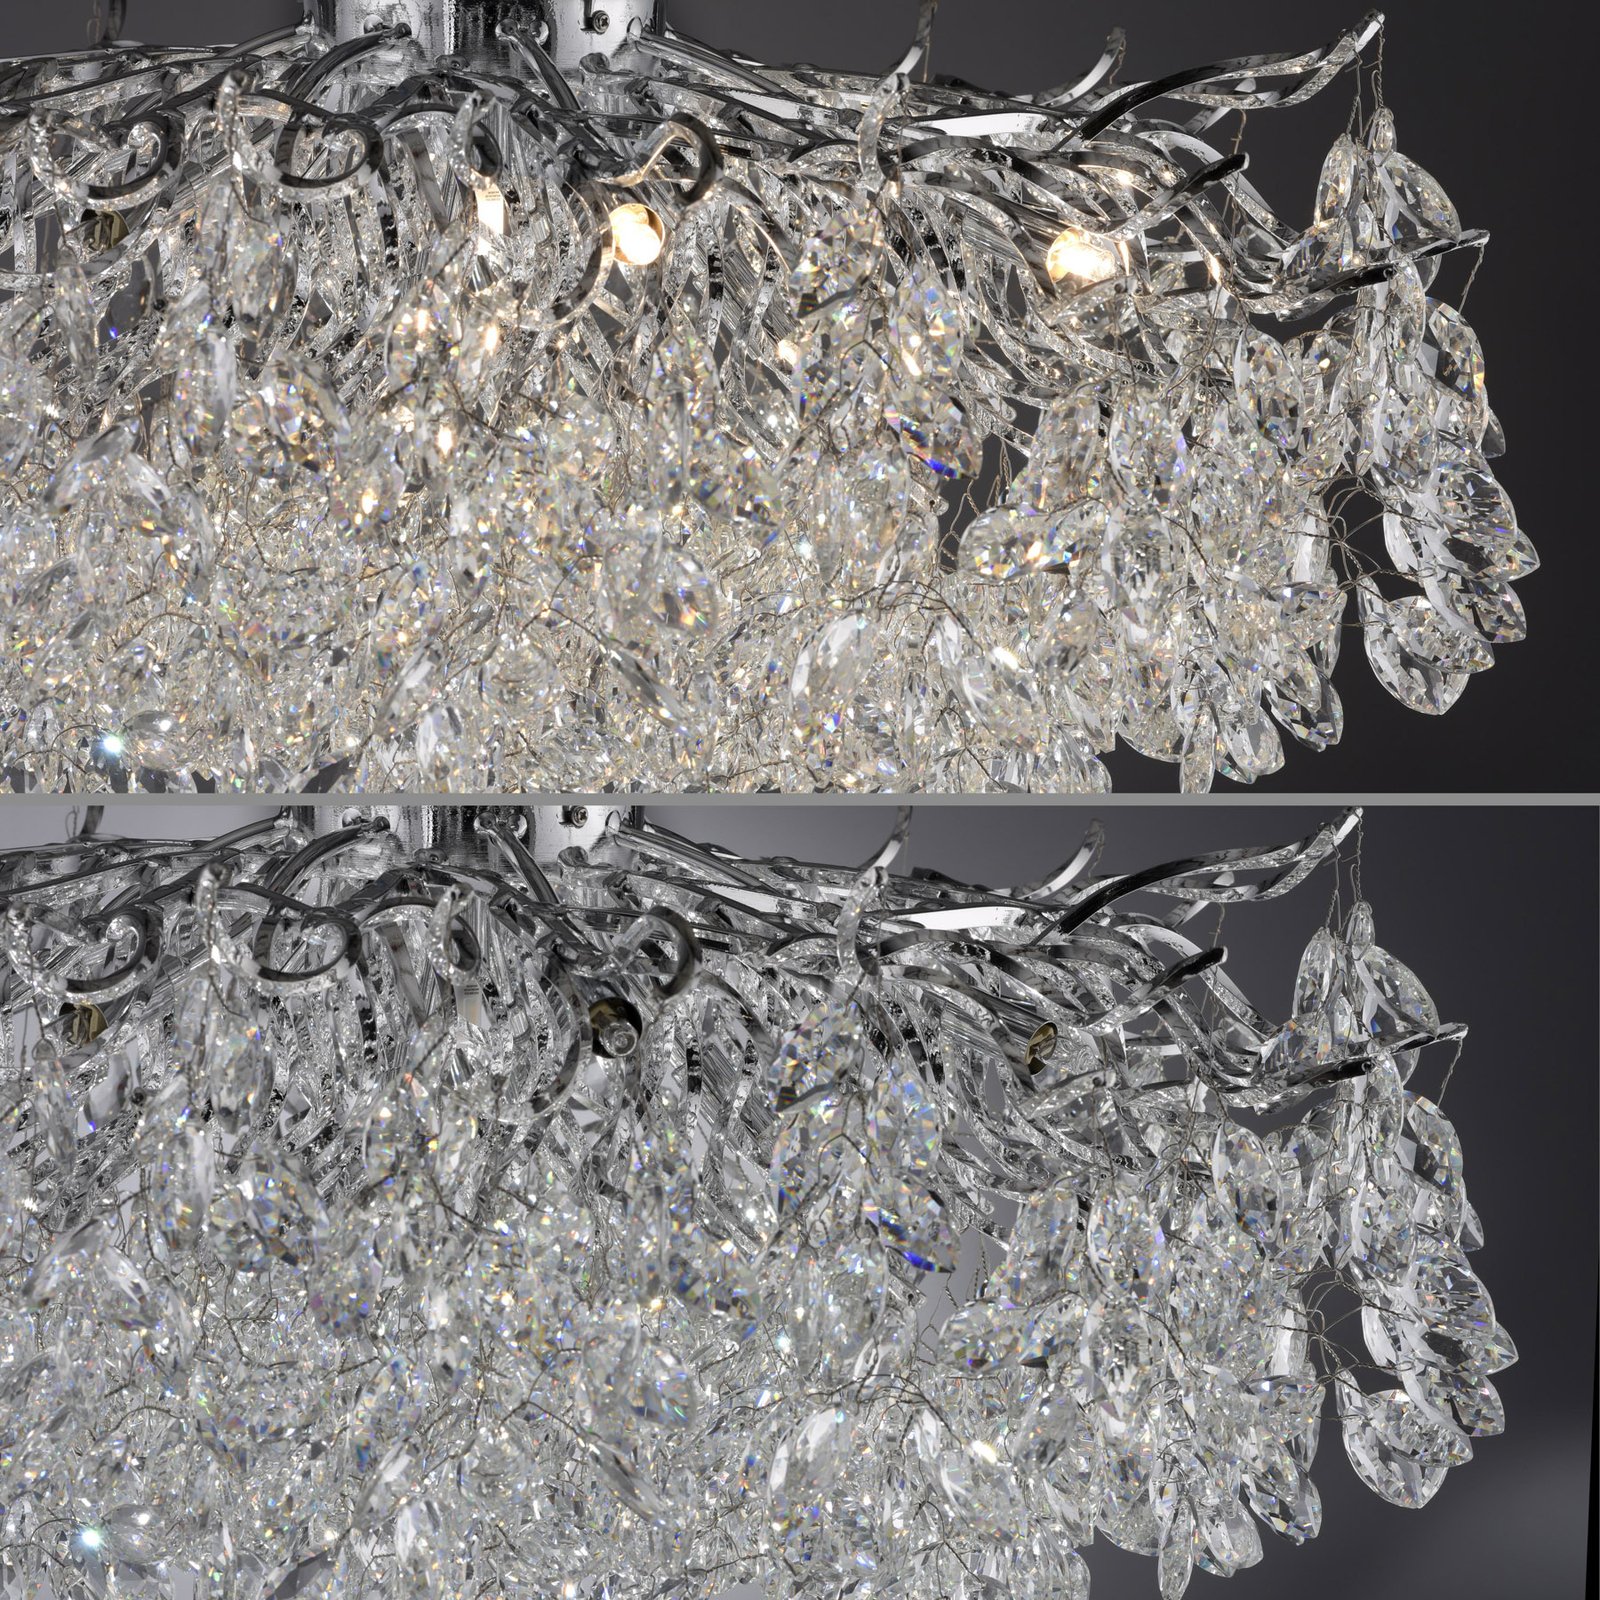 Paul Neuhaus Ricicle plafondlamp, kristallen pendel, Ø 80 cm